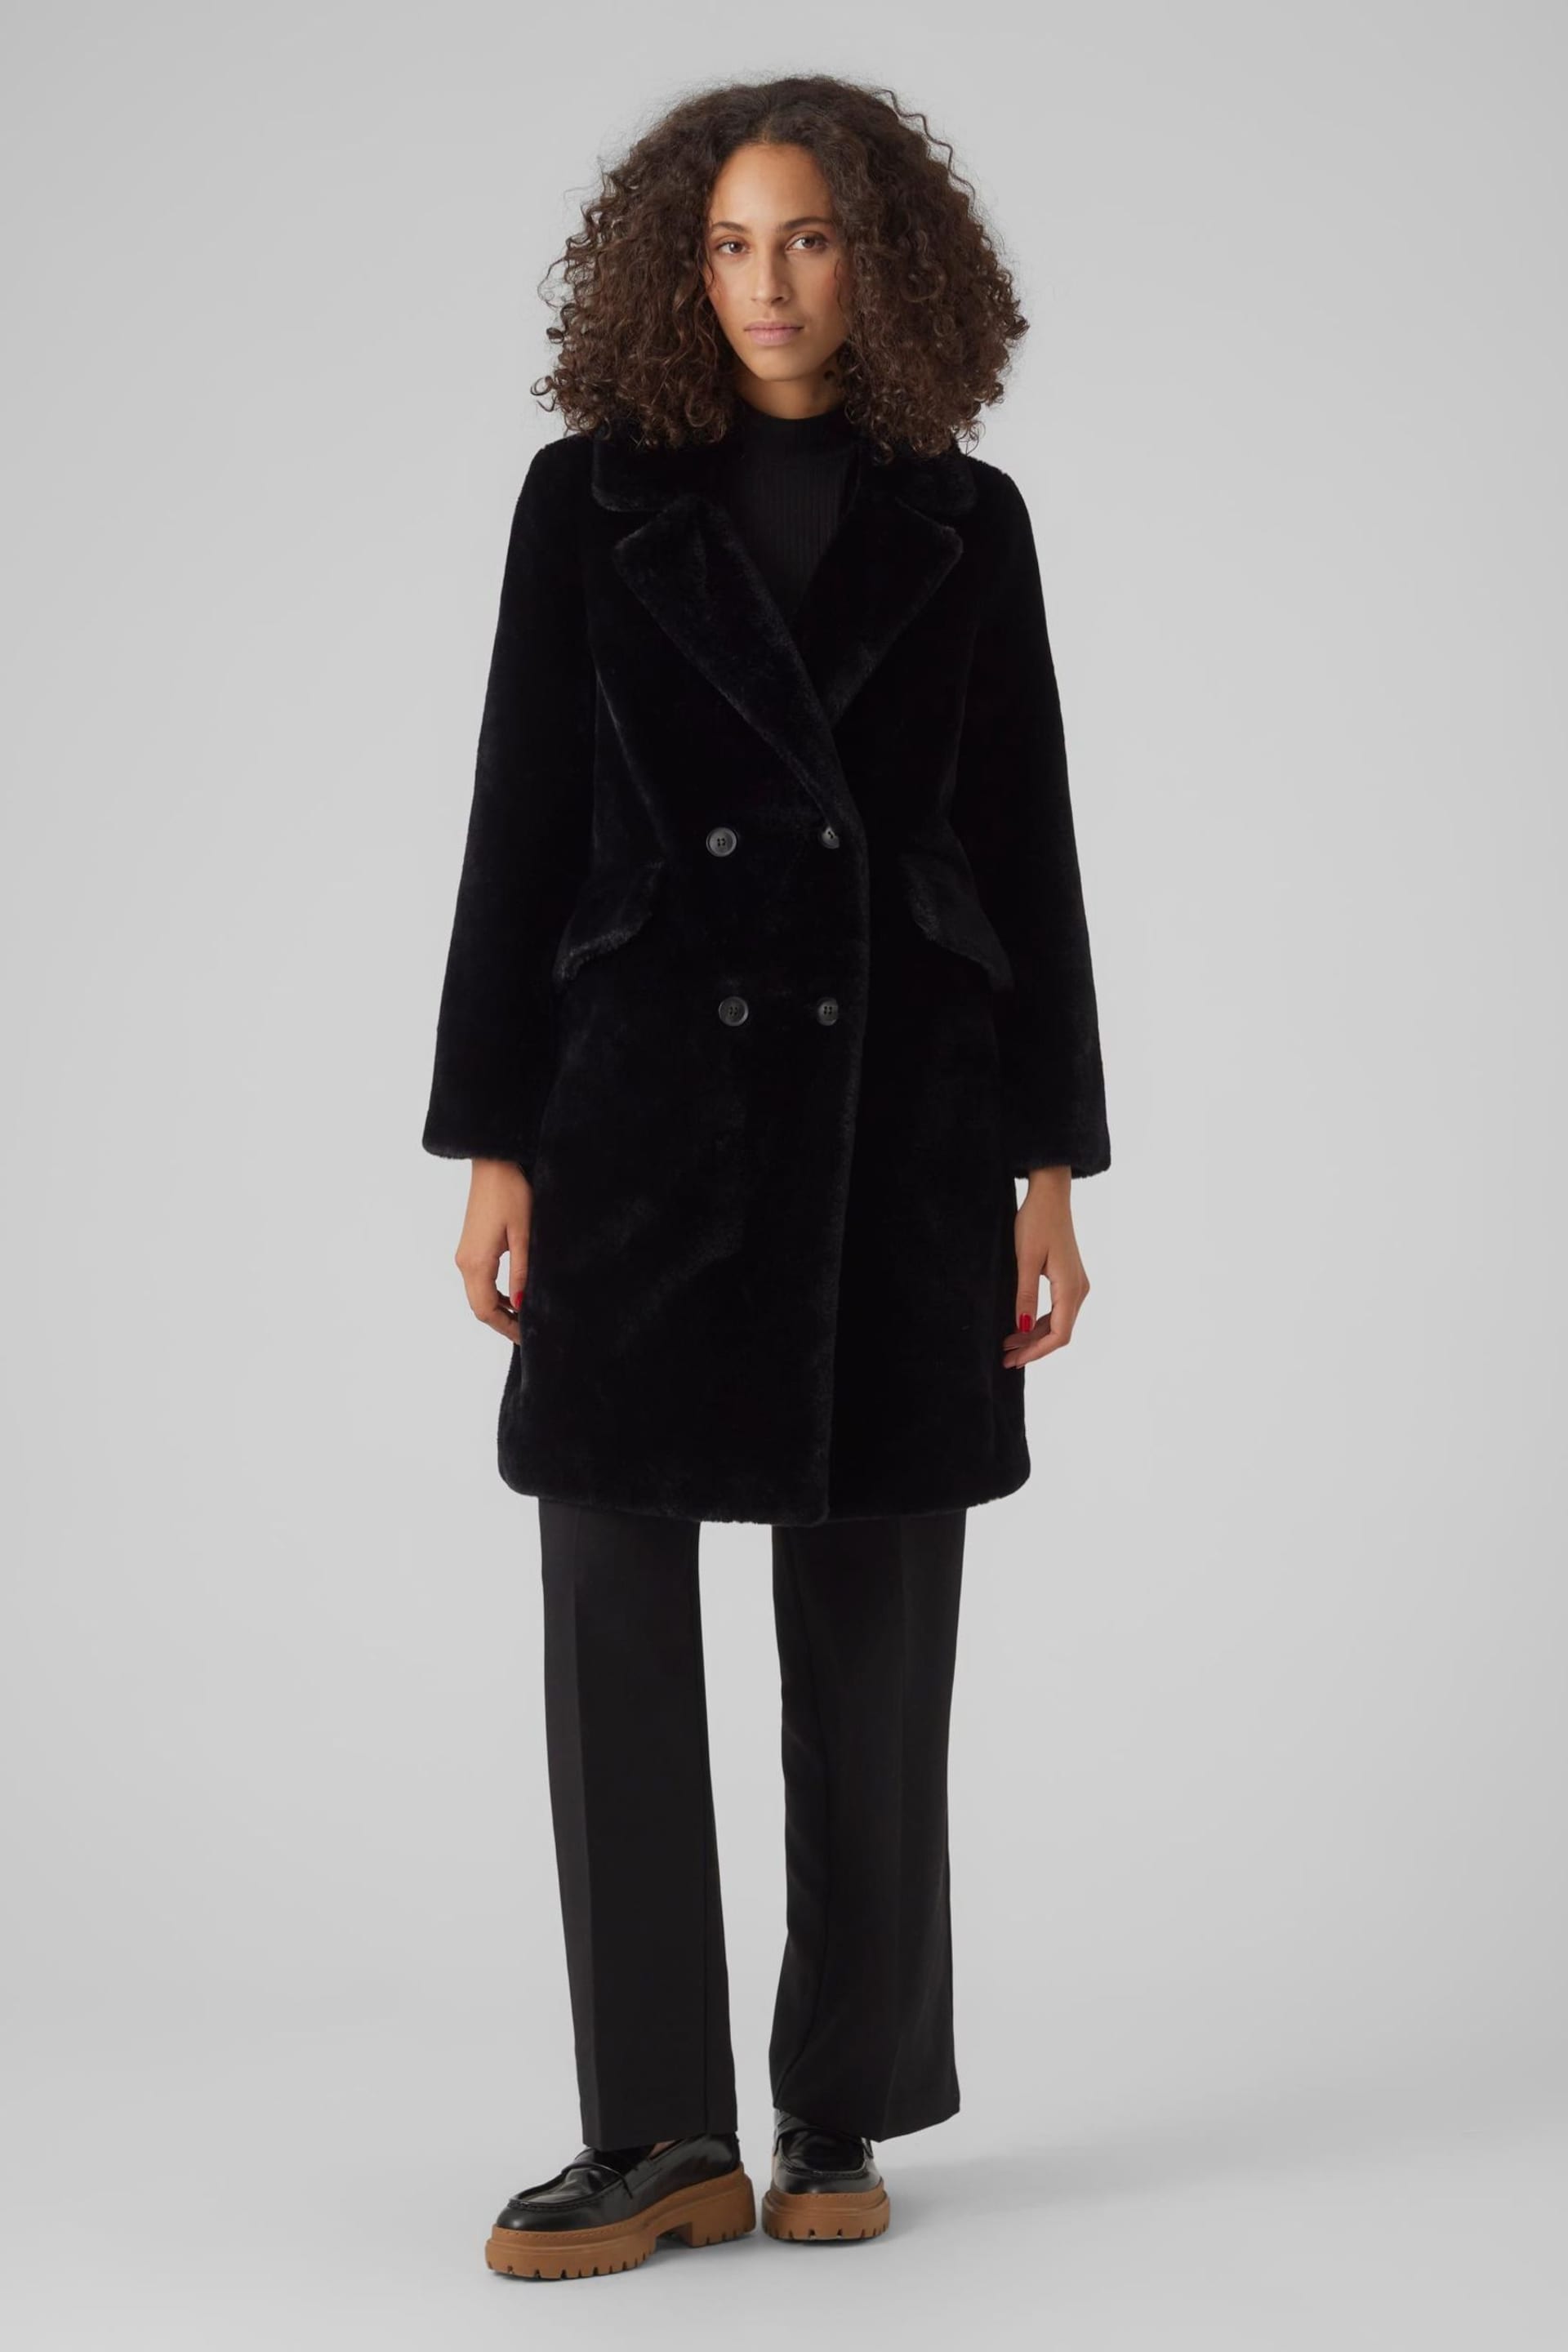 VERO MODA Black Longline Button Up Faux Fur Coat - Image 1 of 5